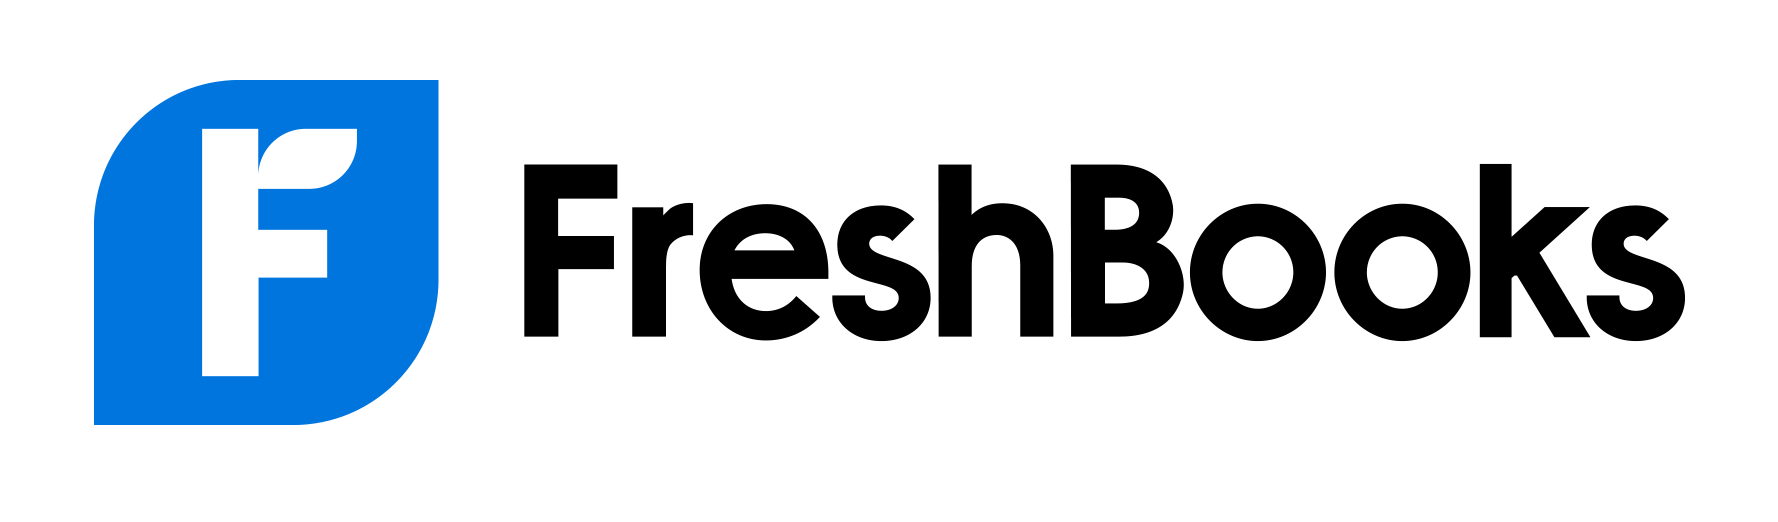 freshbooks-logo-1.png